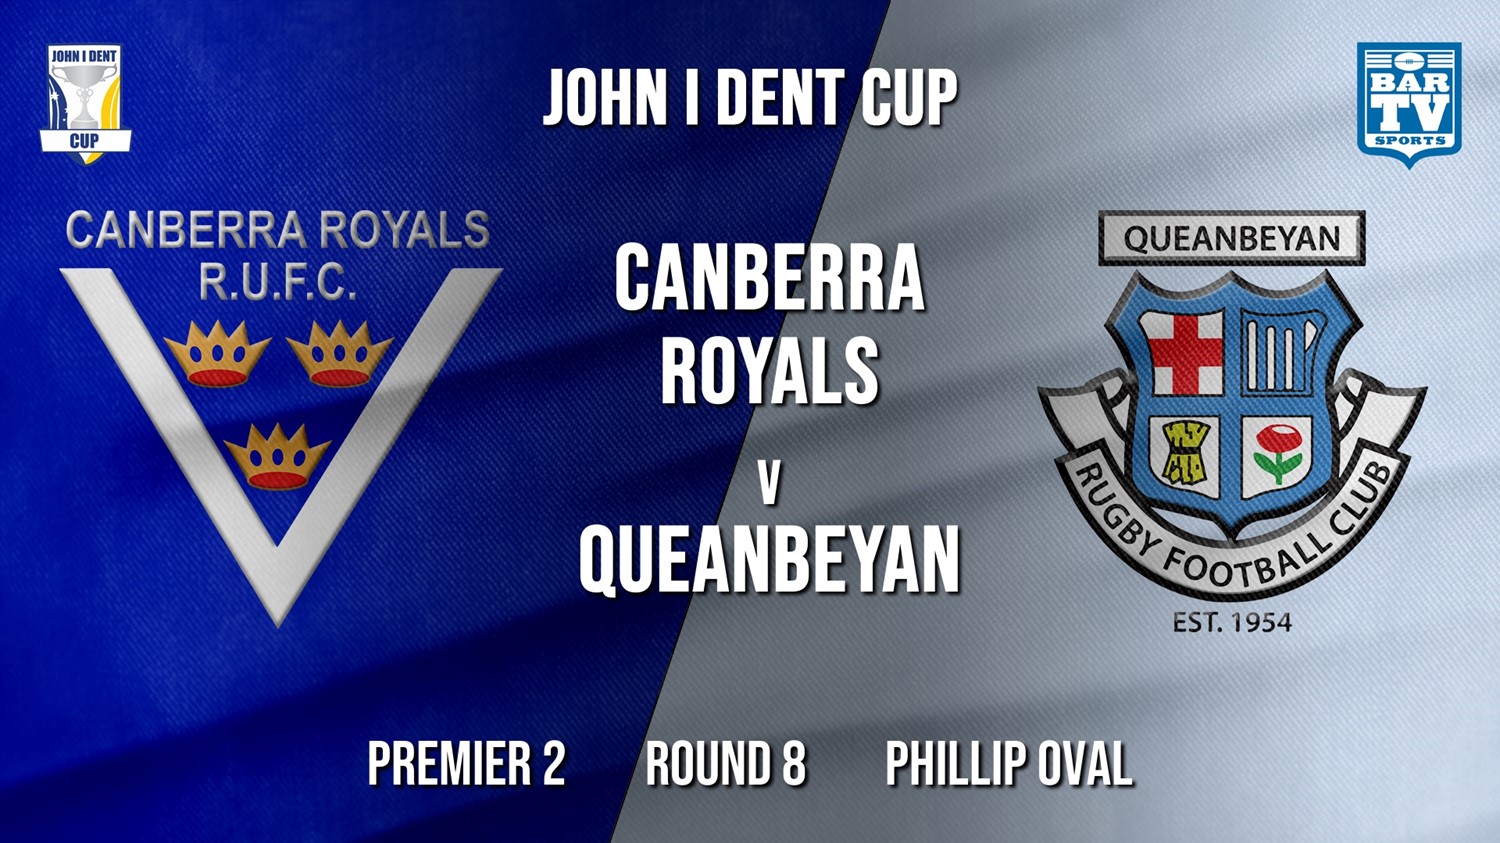 John I Dent Round 8 - Premier 2 - Canberra Royals v Queanbeyan Whites Minigame Slate Image